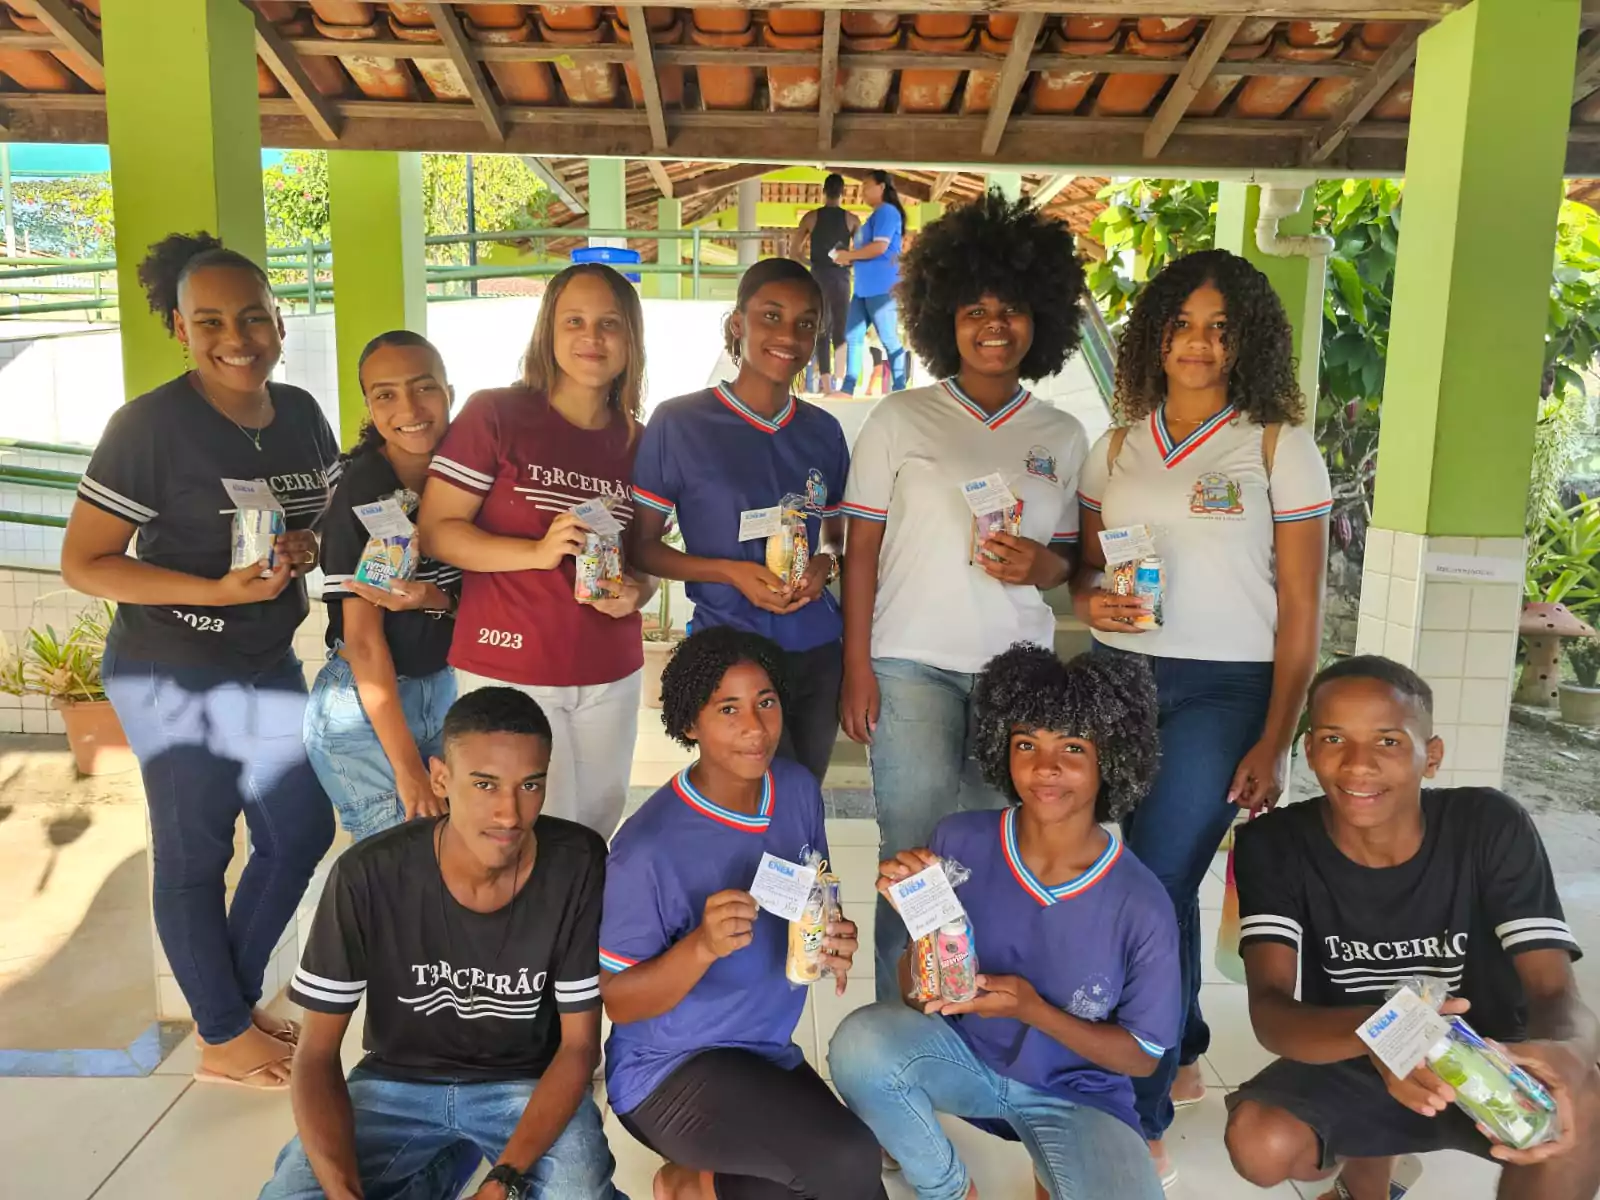 SEC mobiliza a rede estadual de ensino e organiza logística de apoio aos estudantes nos dias das provas do Enem na Bahia